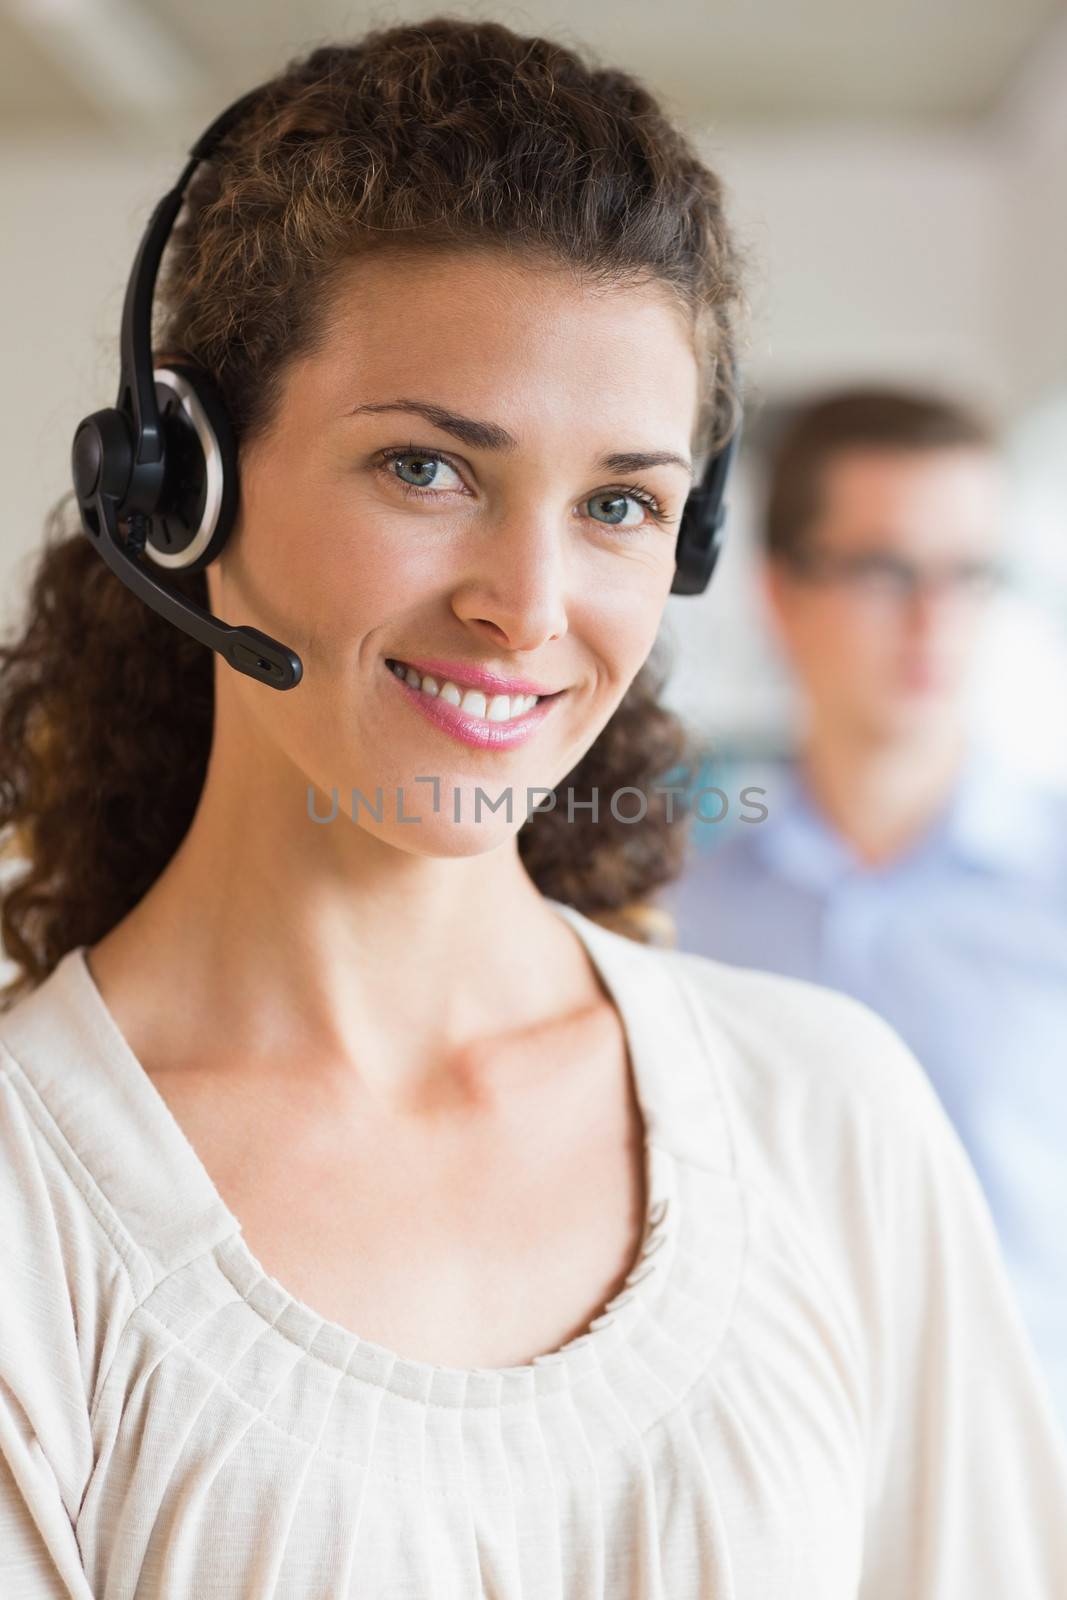 Customer service operator wearing headset by Wavebreakmedia